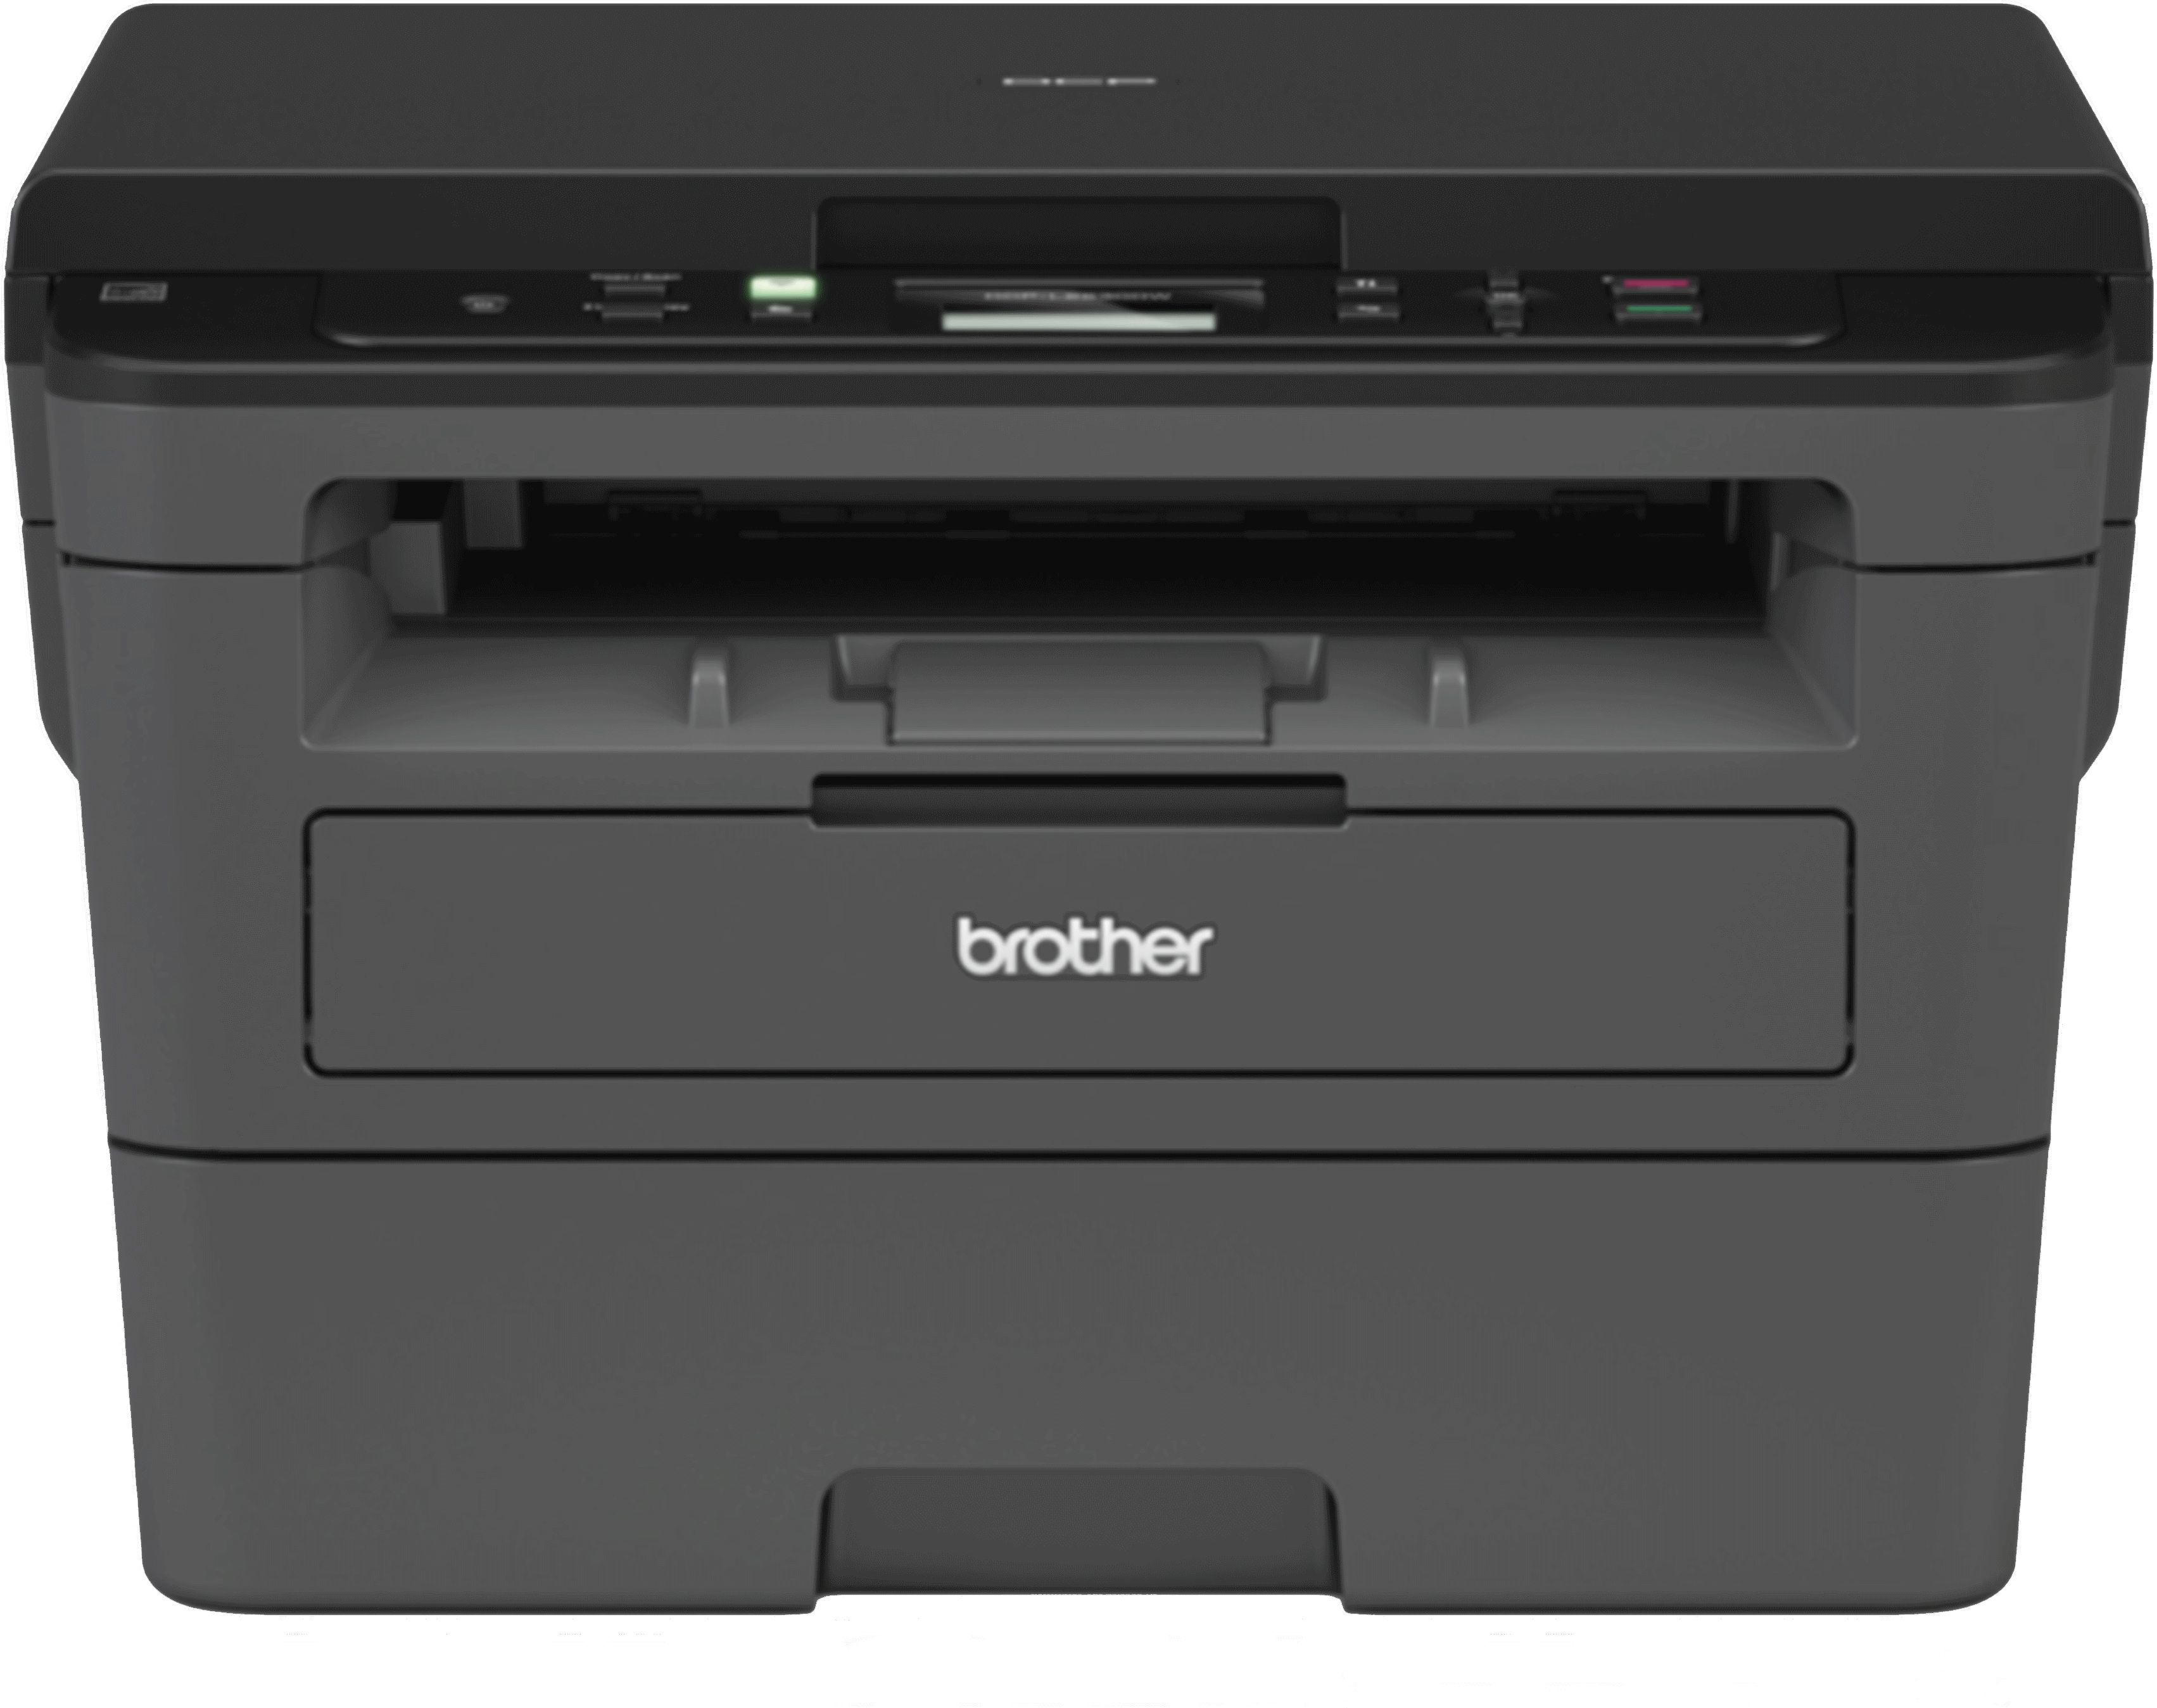 Brother DCP-L2530DW Laser Printer - Black